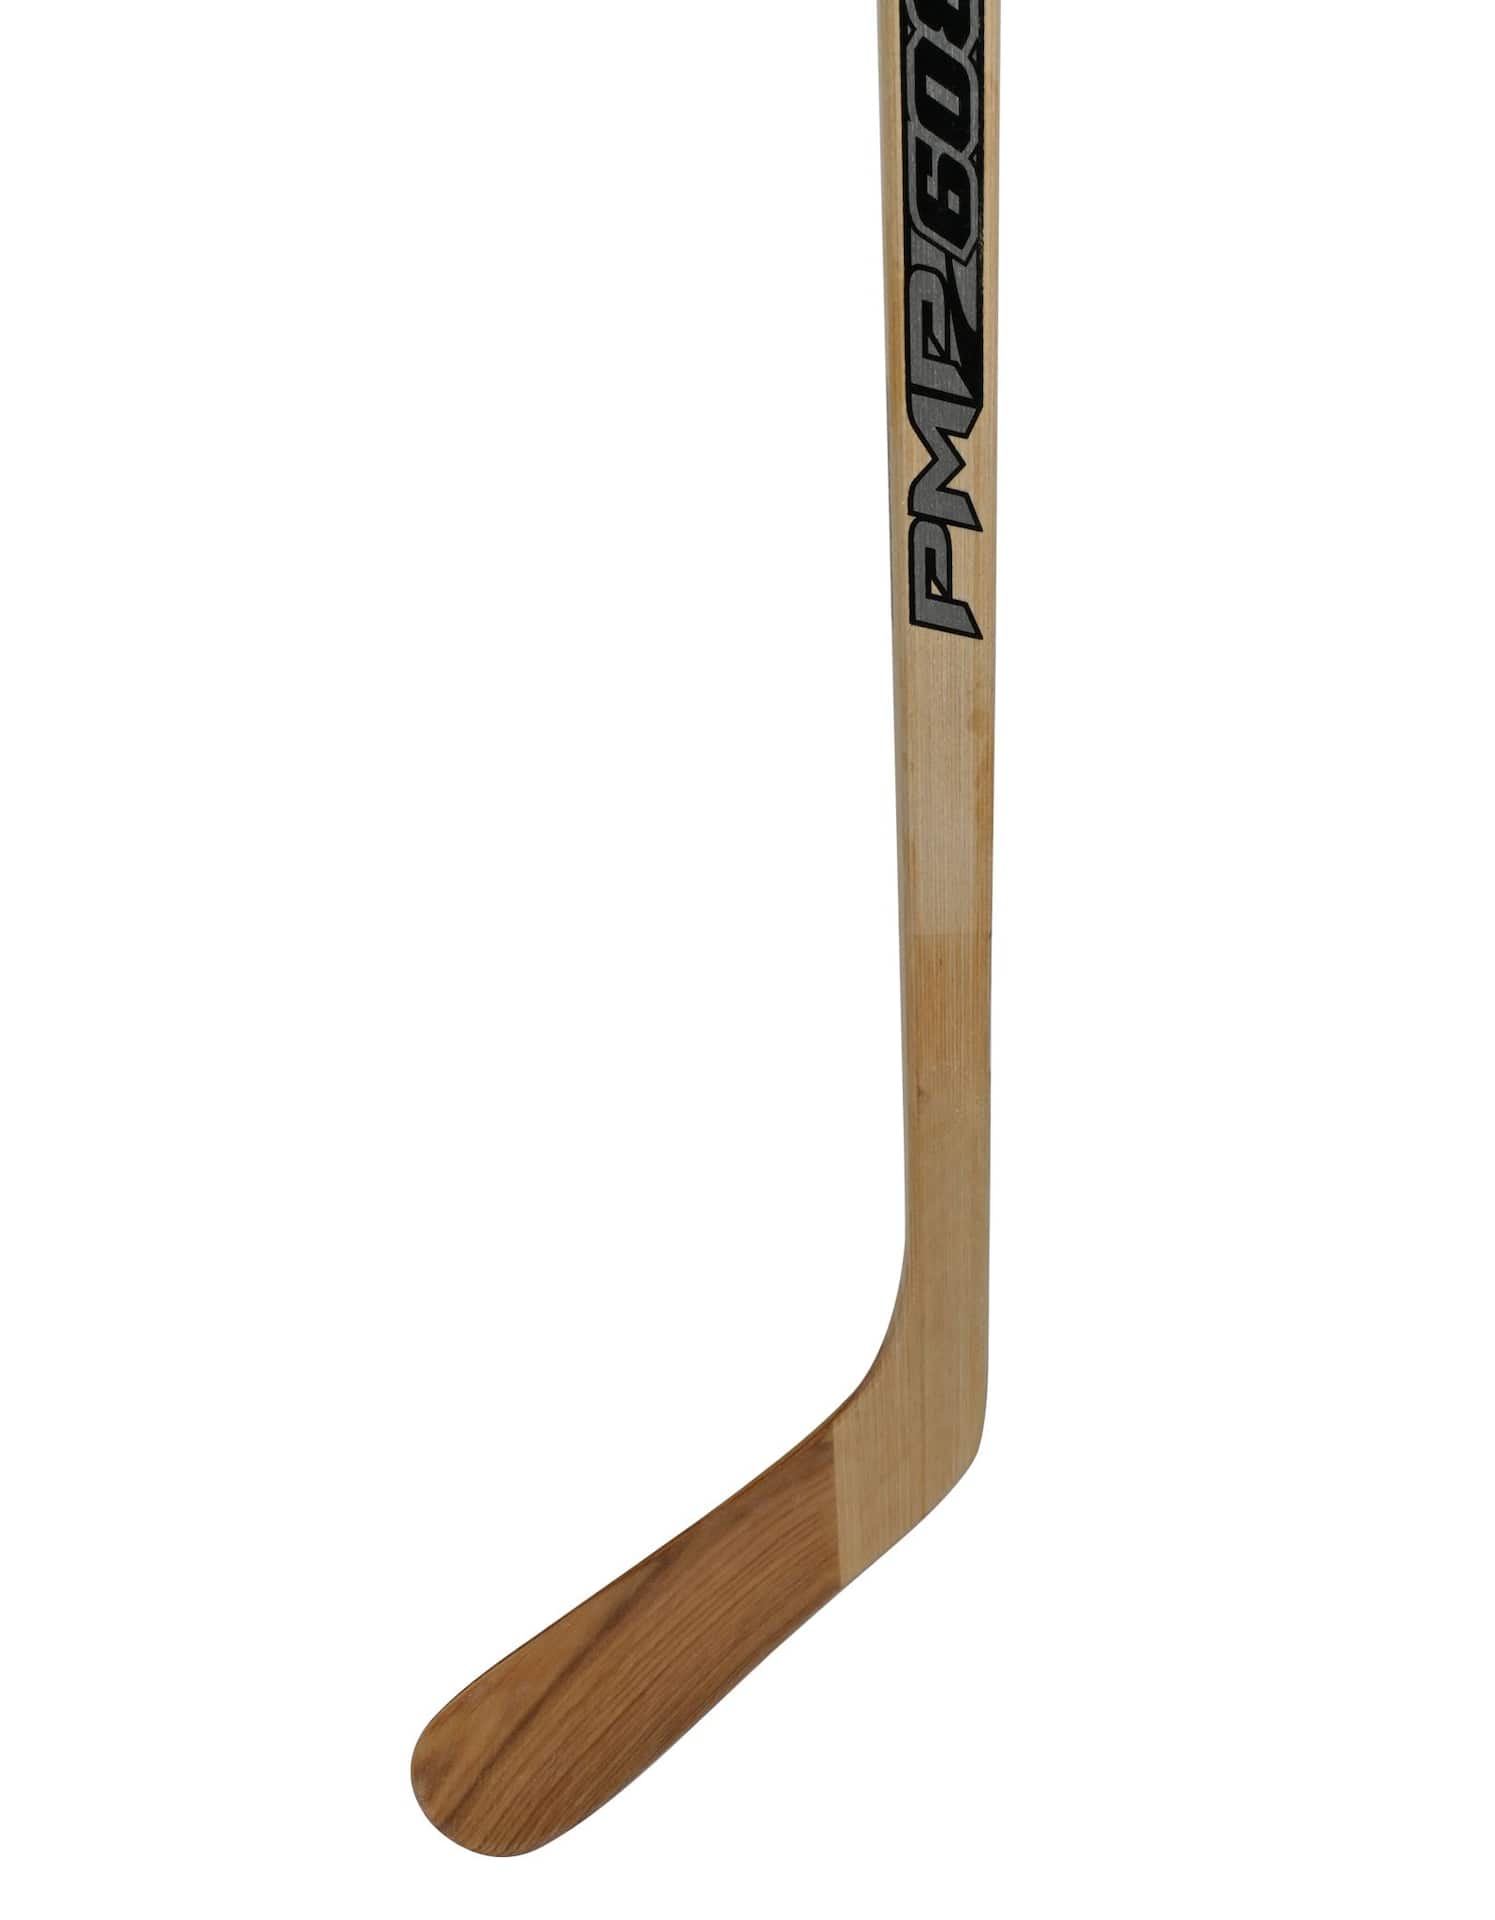 Sherwood 6087 Wood Hockey Stick, Youth,43 Flex, Straight Blade